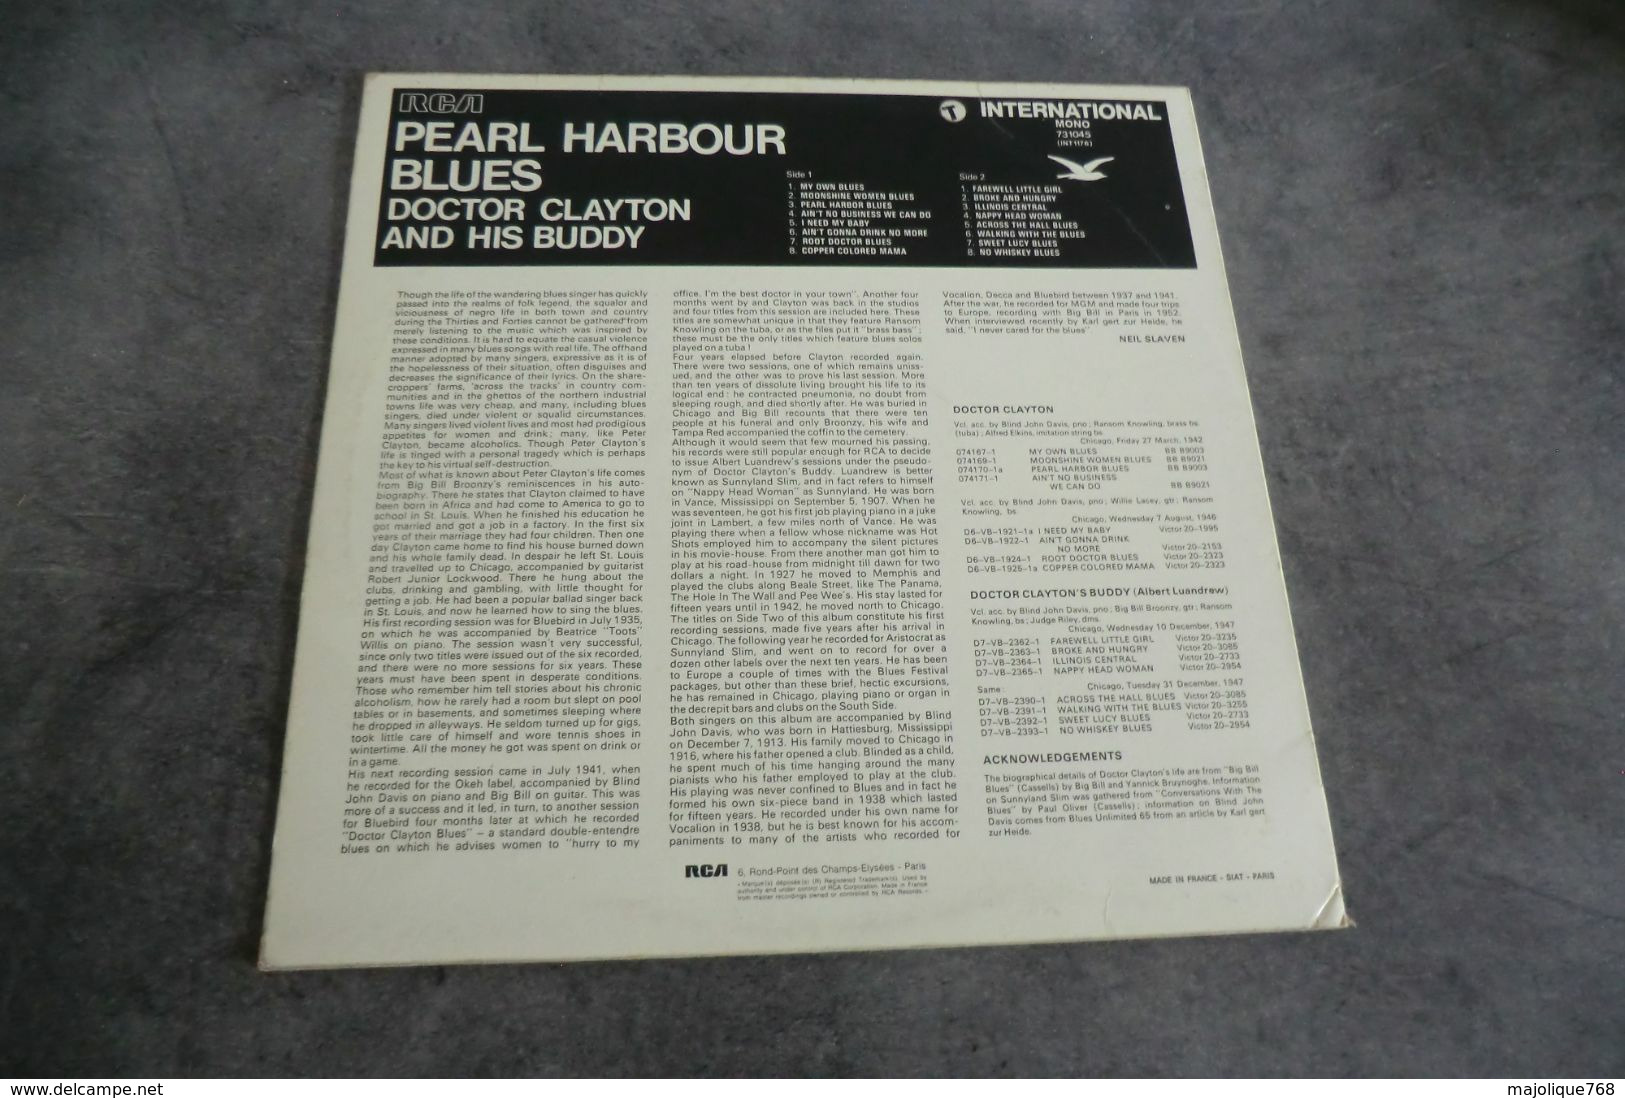 Disque - Docteur Clayton & His Buddy - Pearl Harbour Blues - RCA International 731045 MONO - 1970 UK - Blues